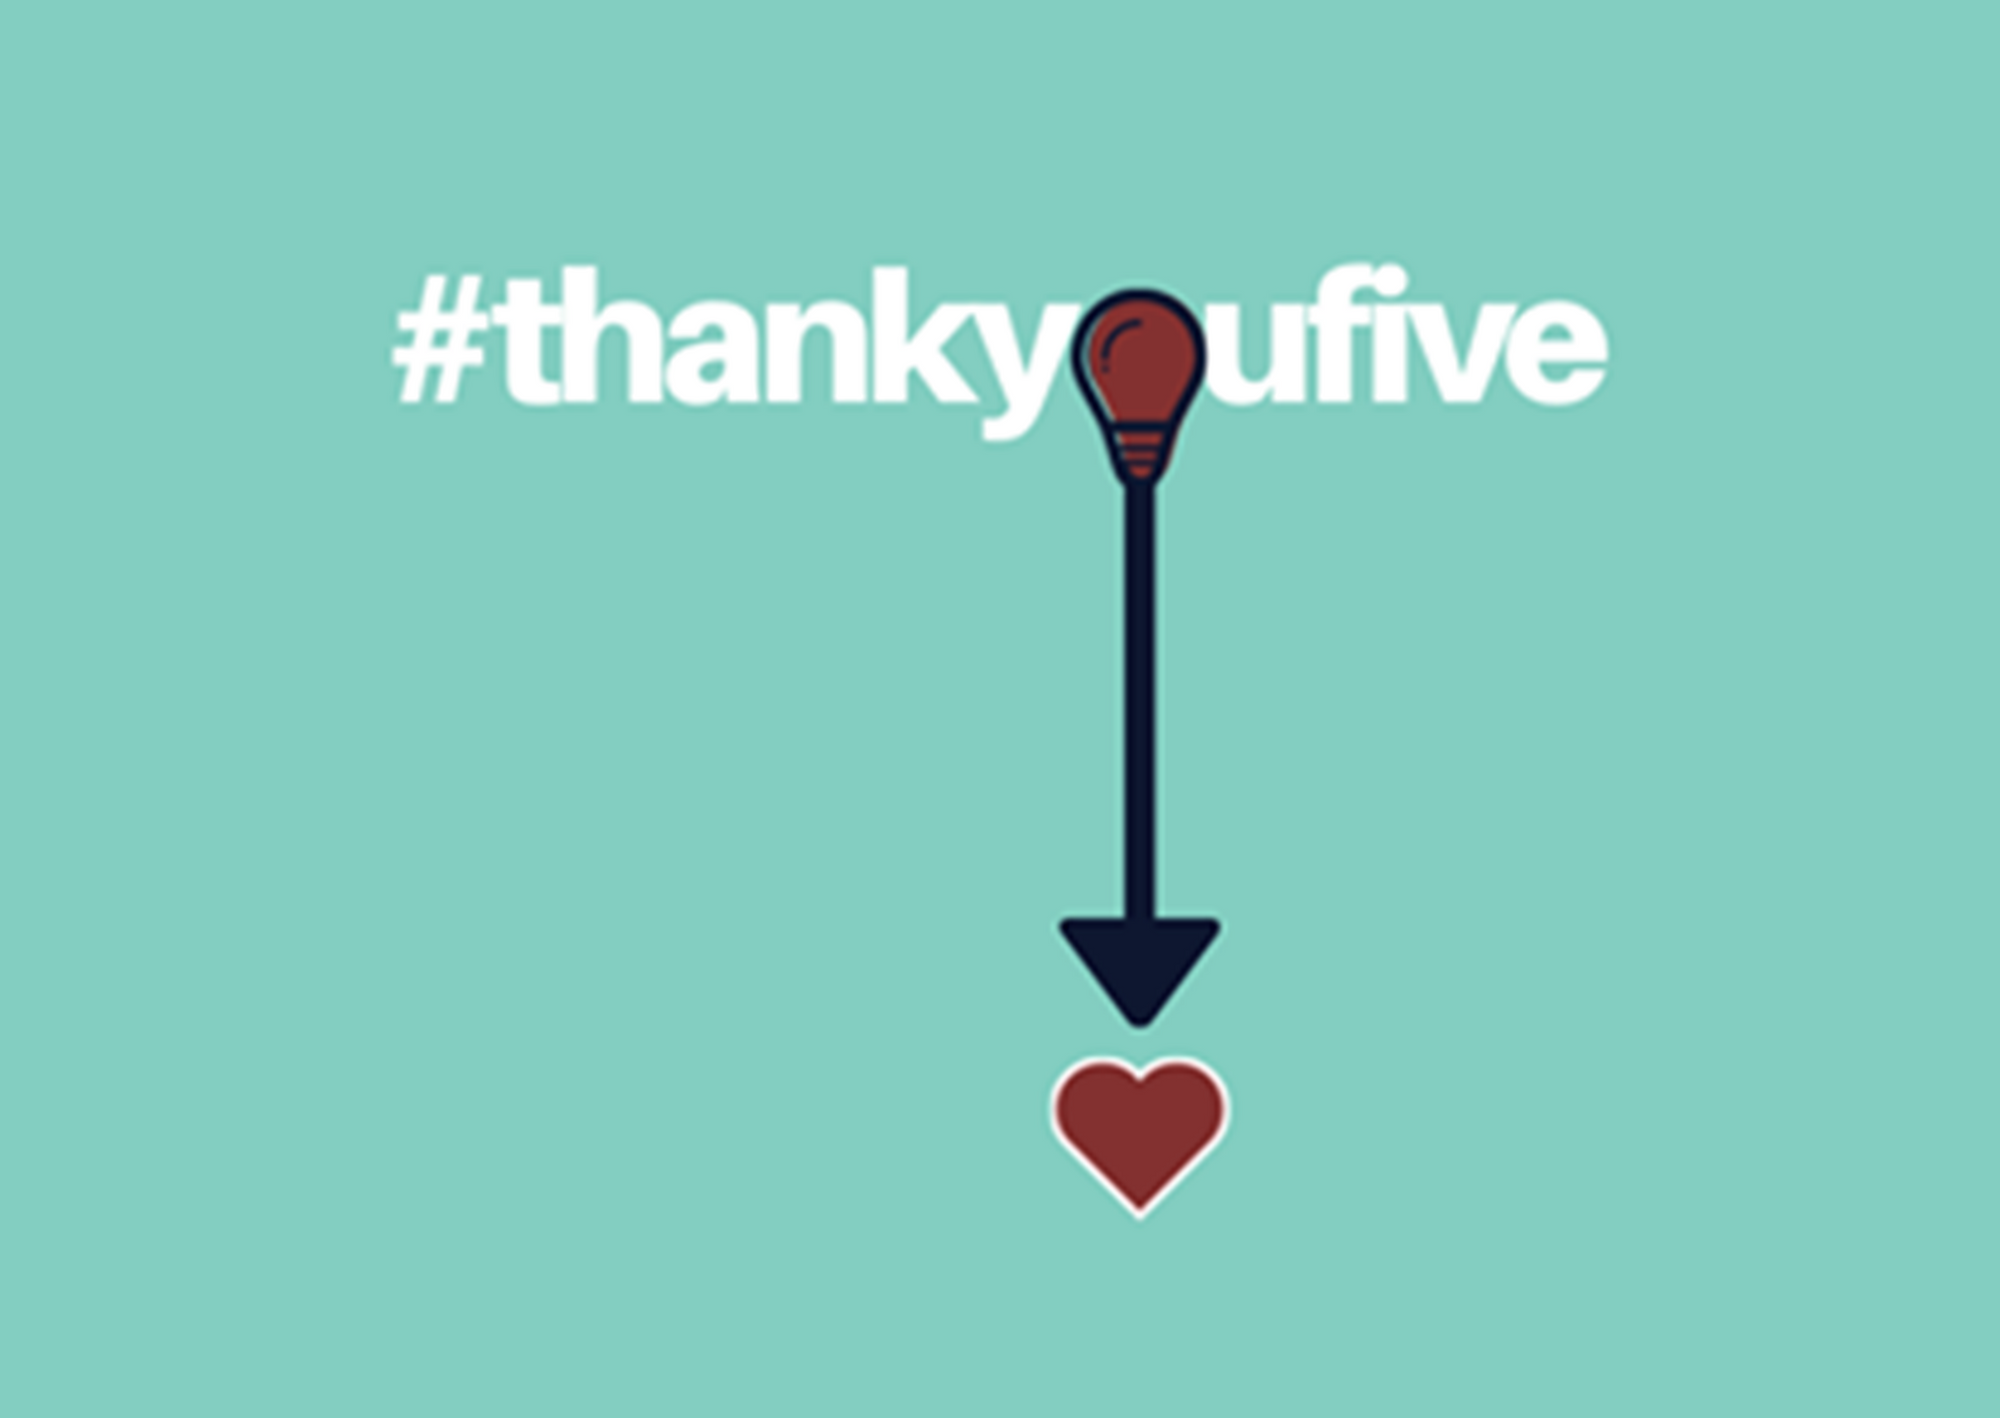 The Cre8sian Project Spotlight: #thankyoufive